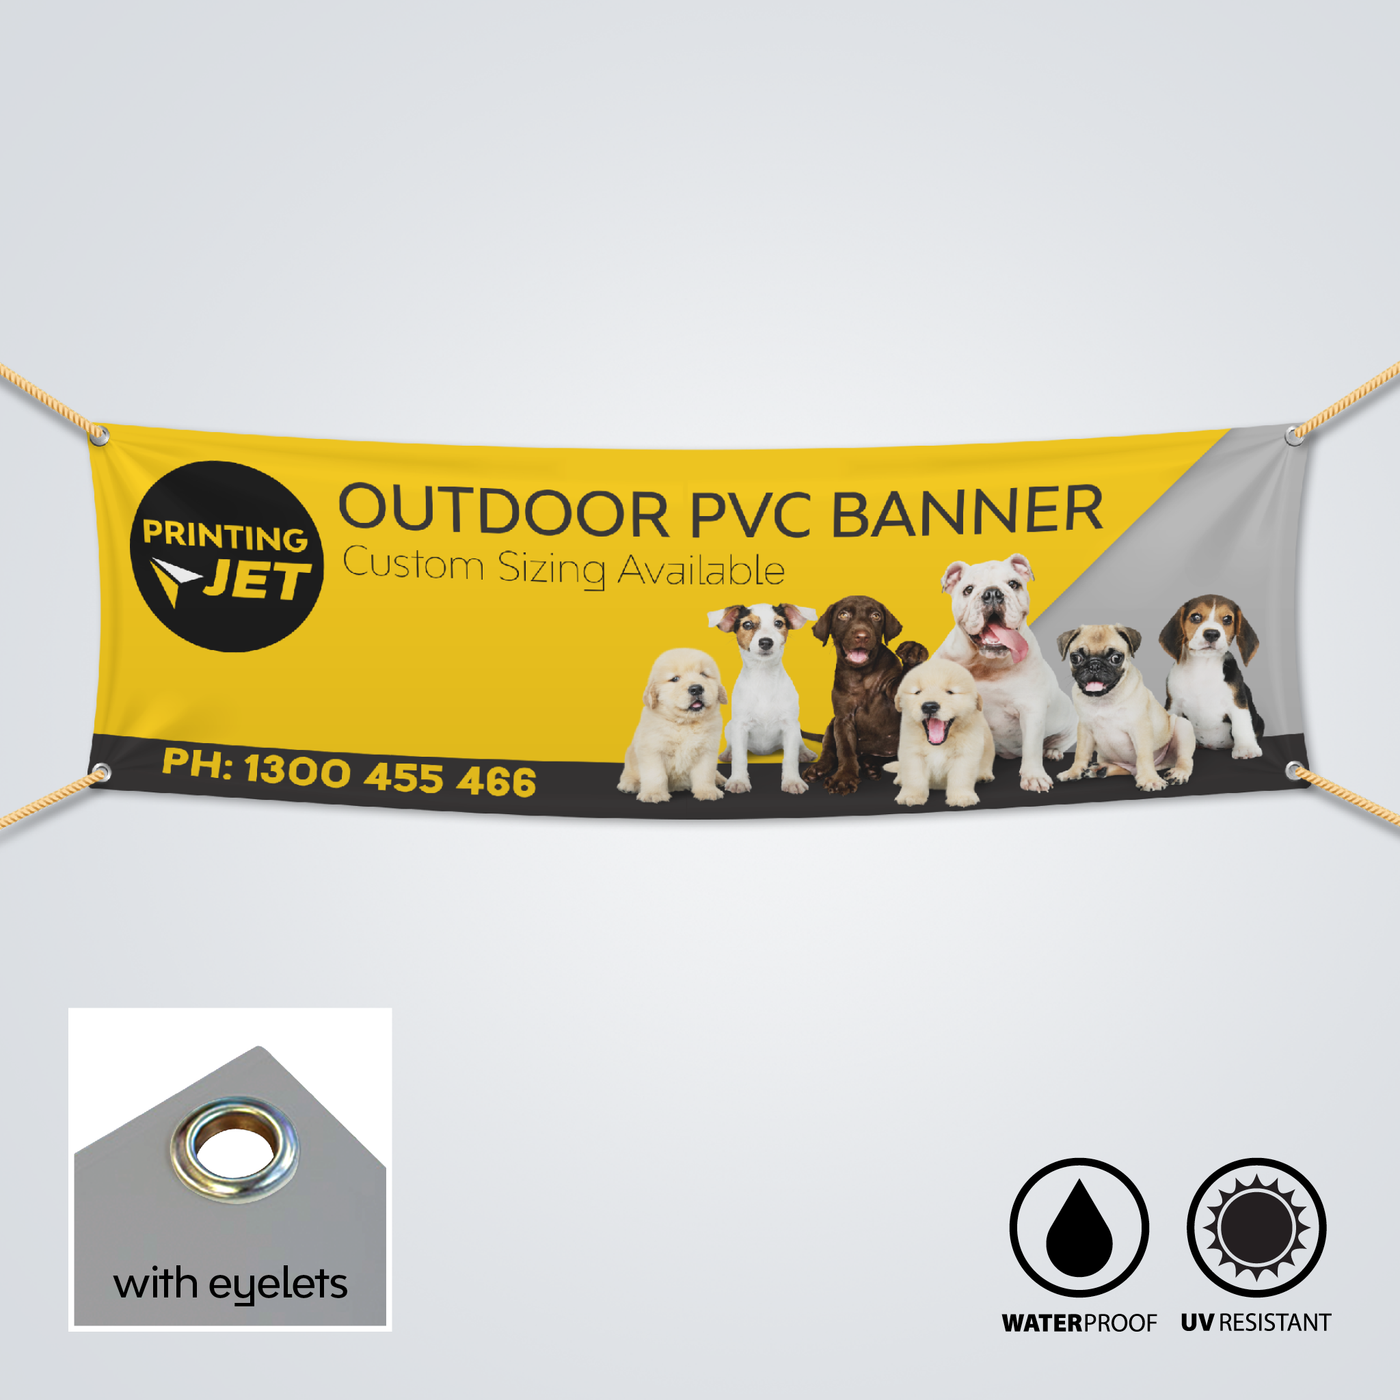 Outdoor PVC Banner